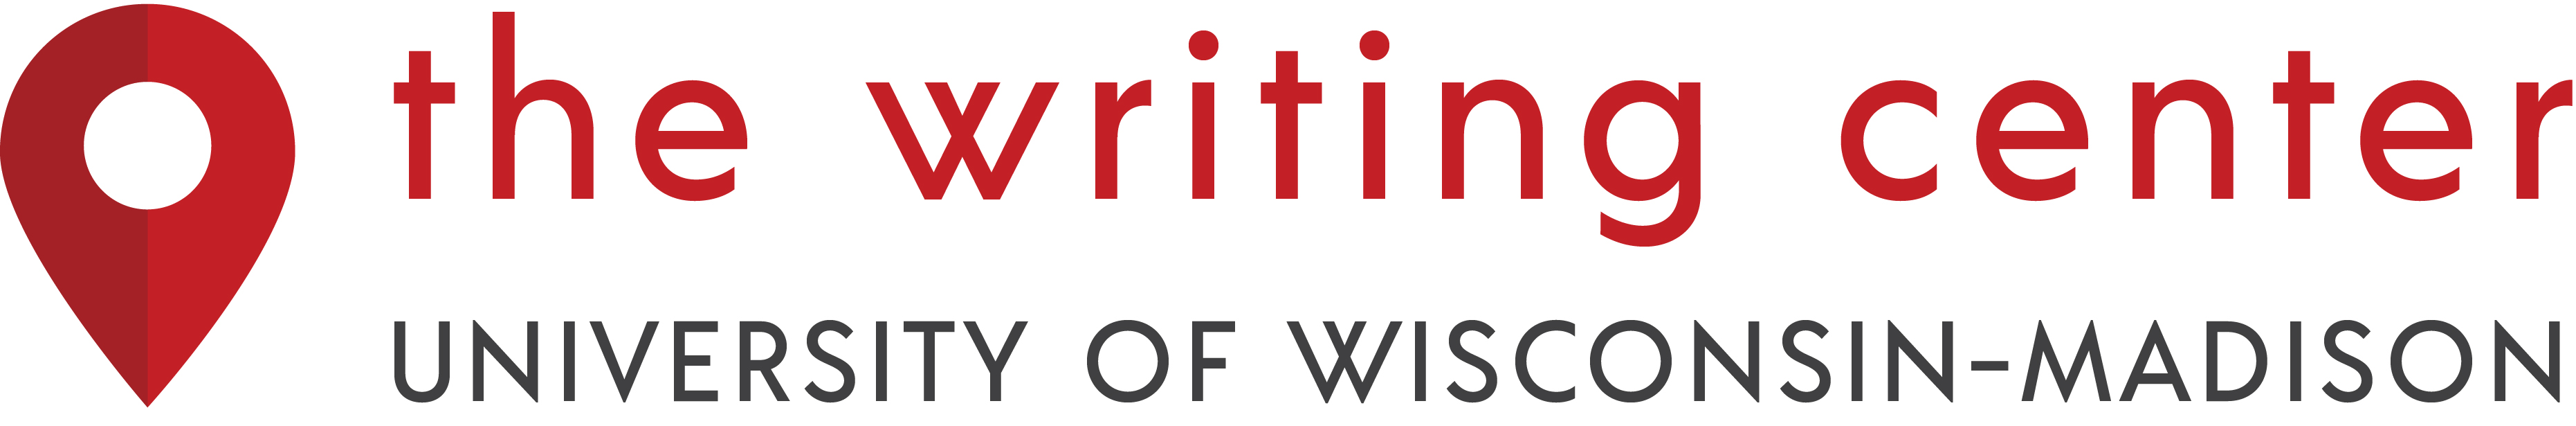 writing-center-university-wisconsin-madison